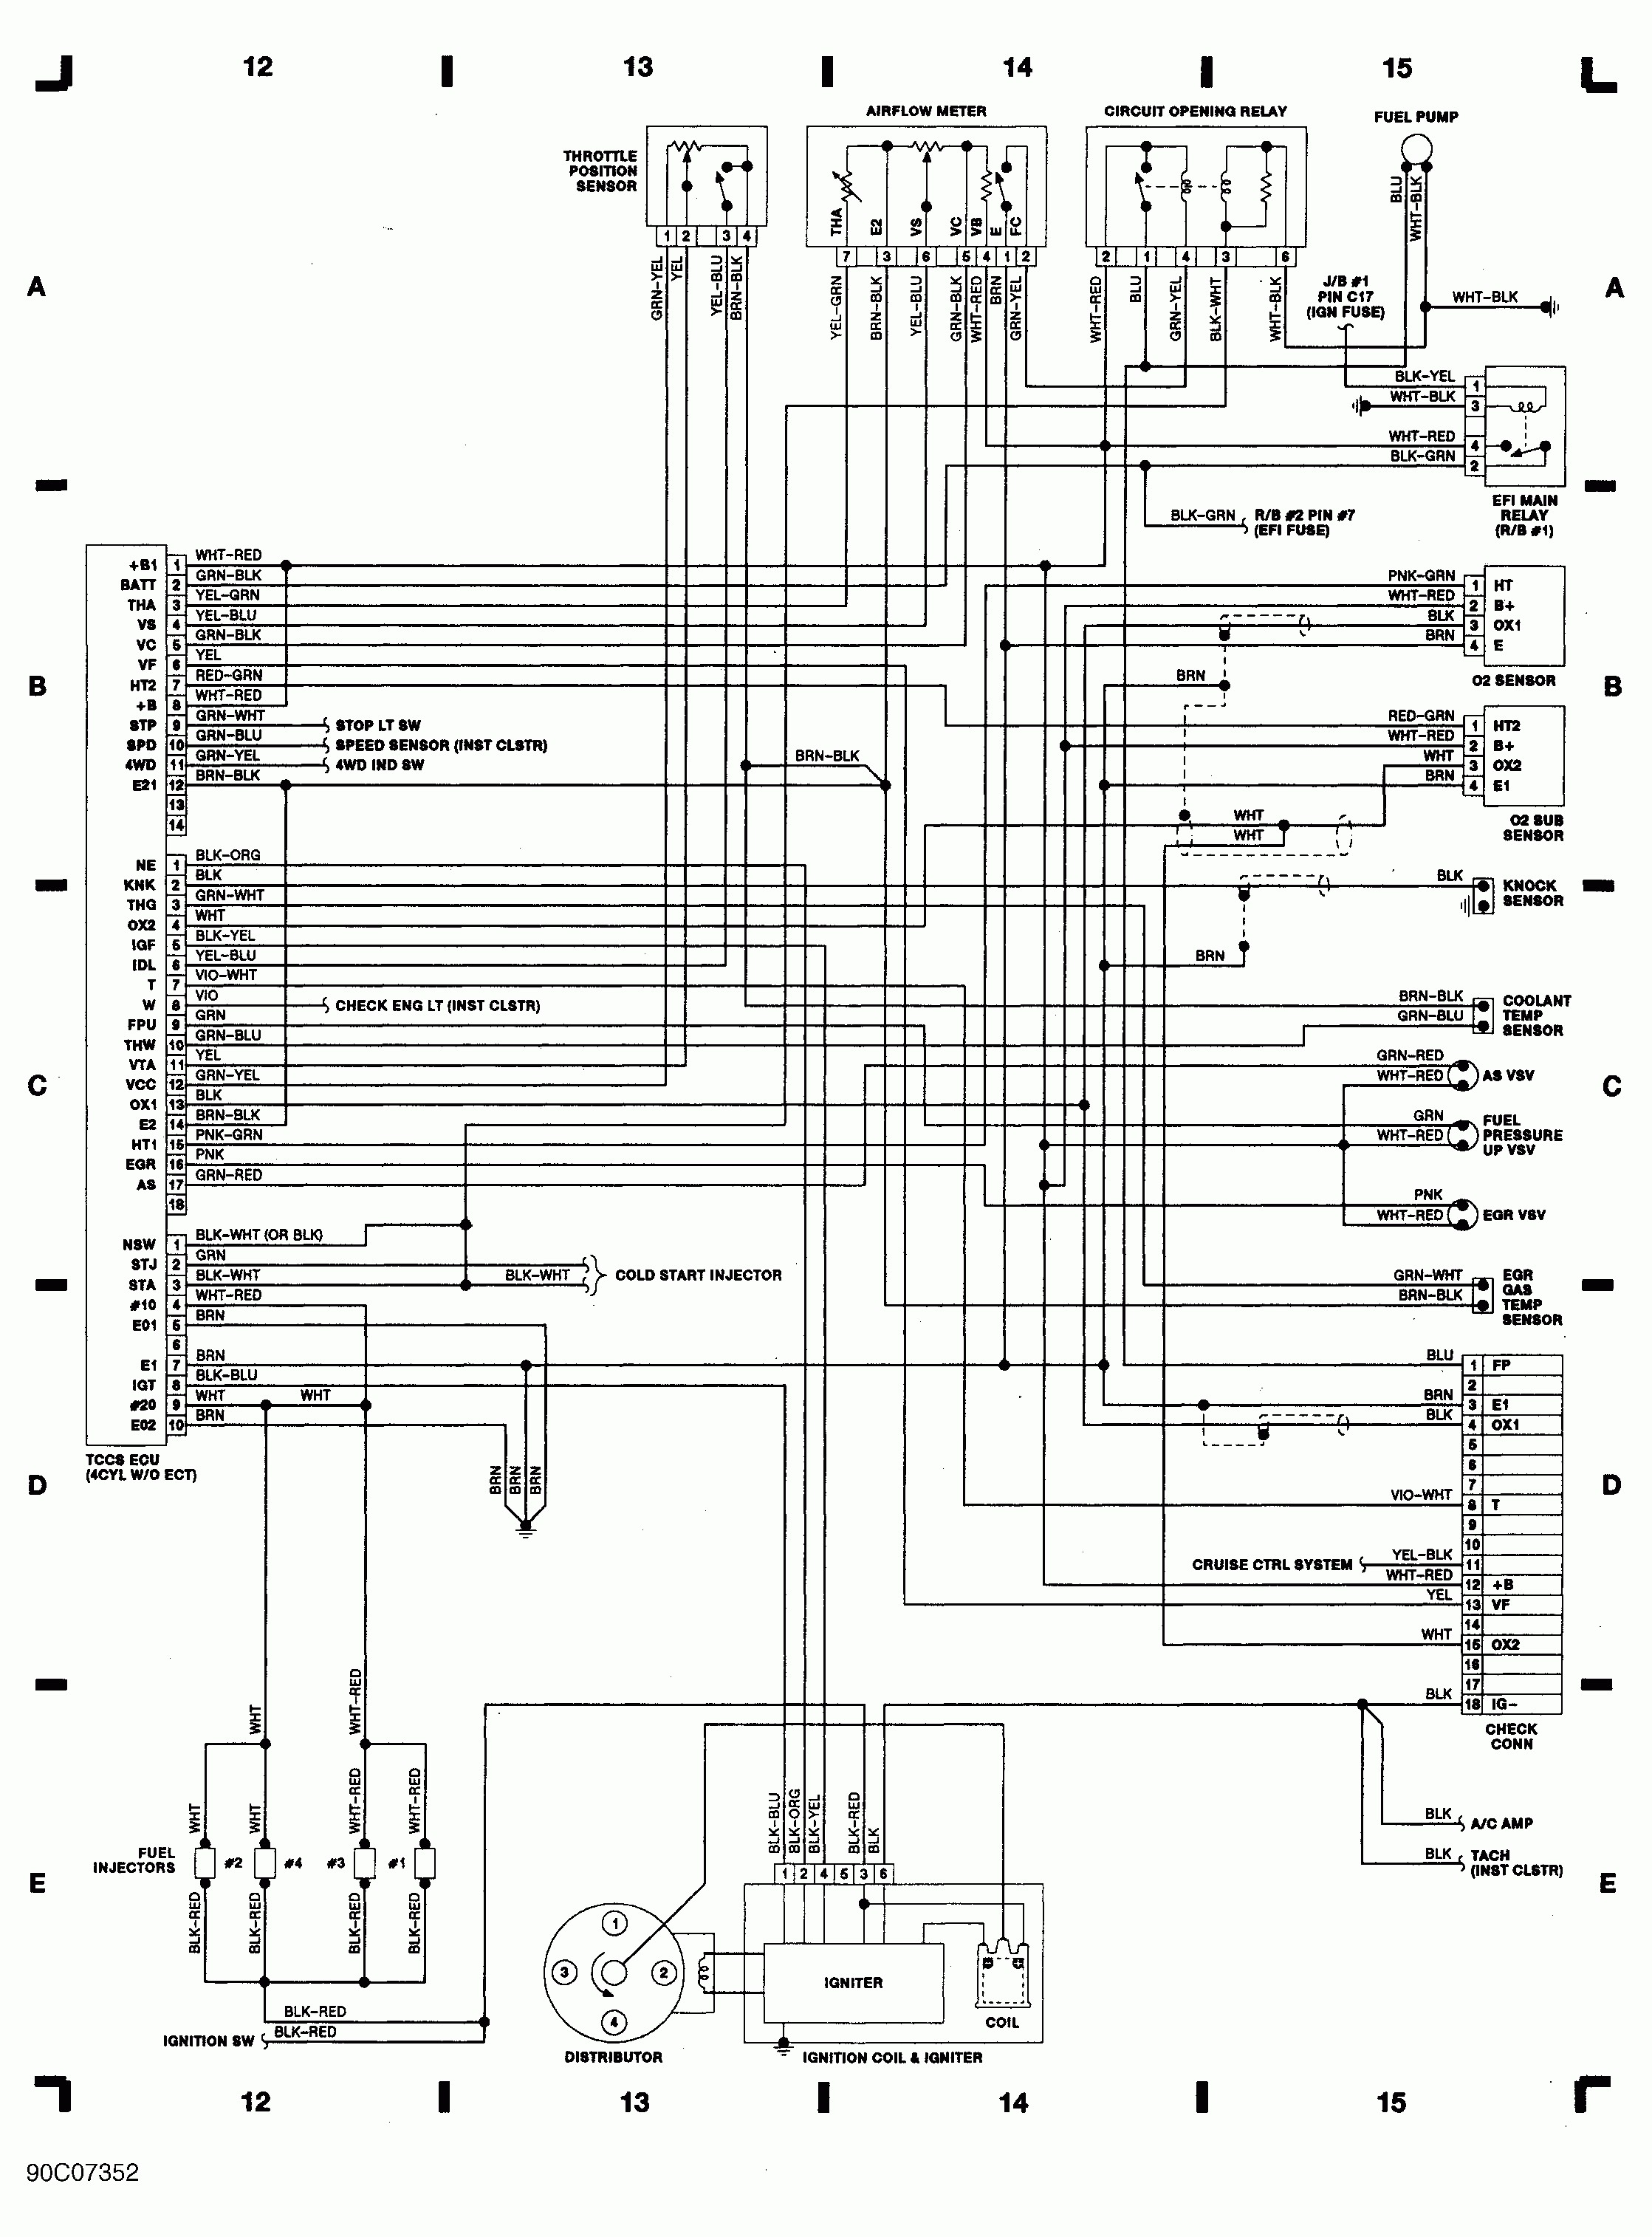 1995 toyota Tercel Engine Diagram 1992 toyota Wiring Diagram Wiring Diagram toolbox Of 1995 toyota Tercel Engine Diagram